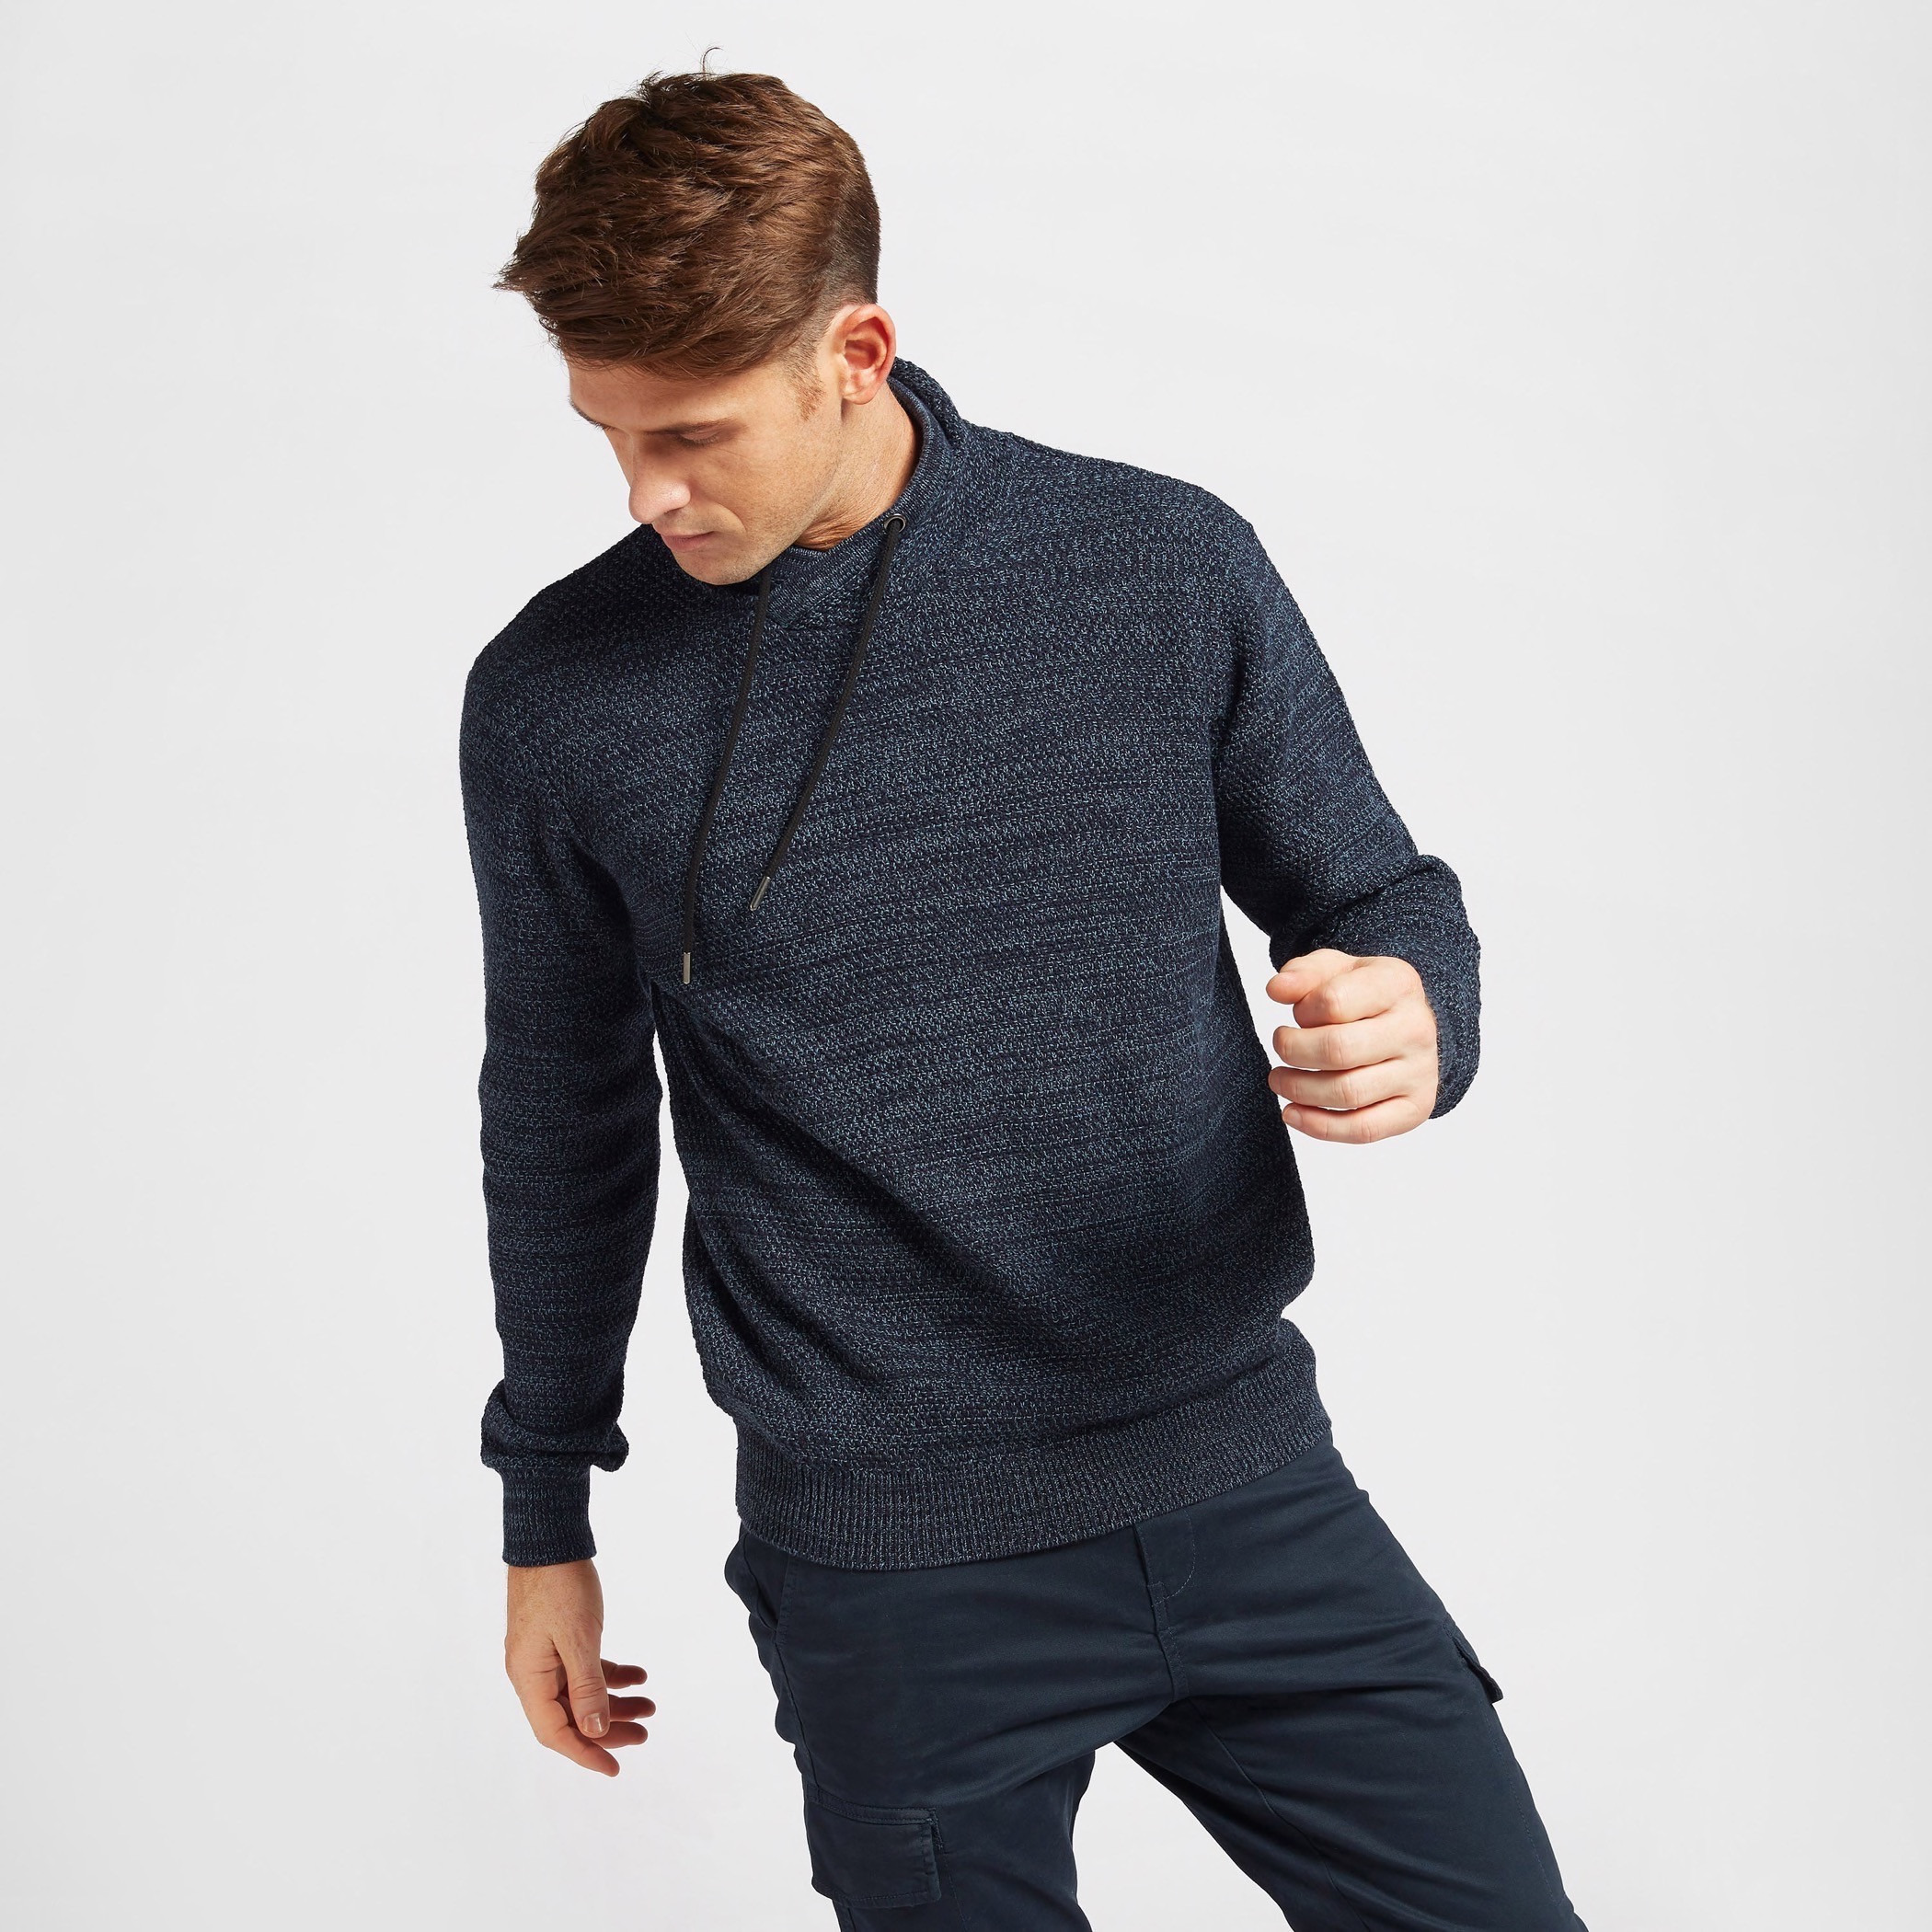 Fashion Men's Long Sleeve Sweater Jumper Knit Pullover Cardigan Jacket Tops M~2X 